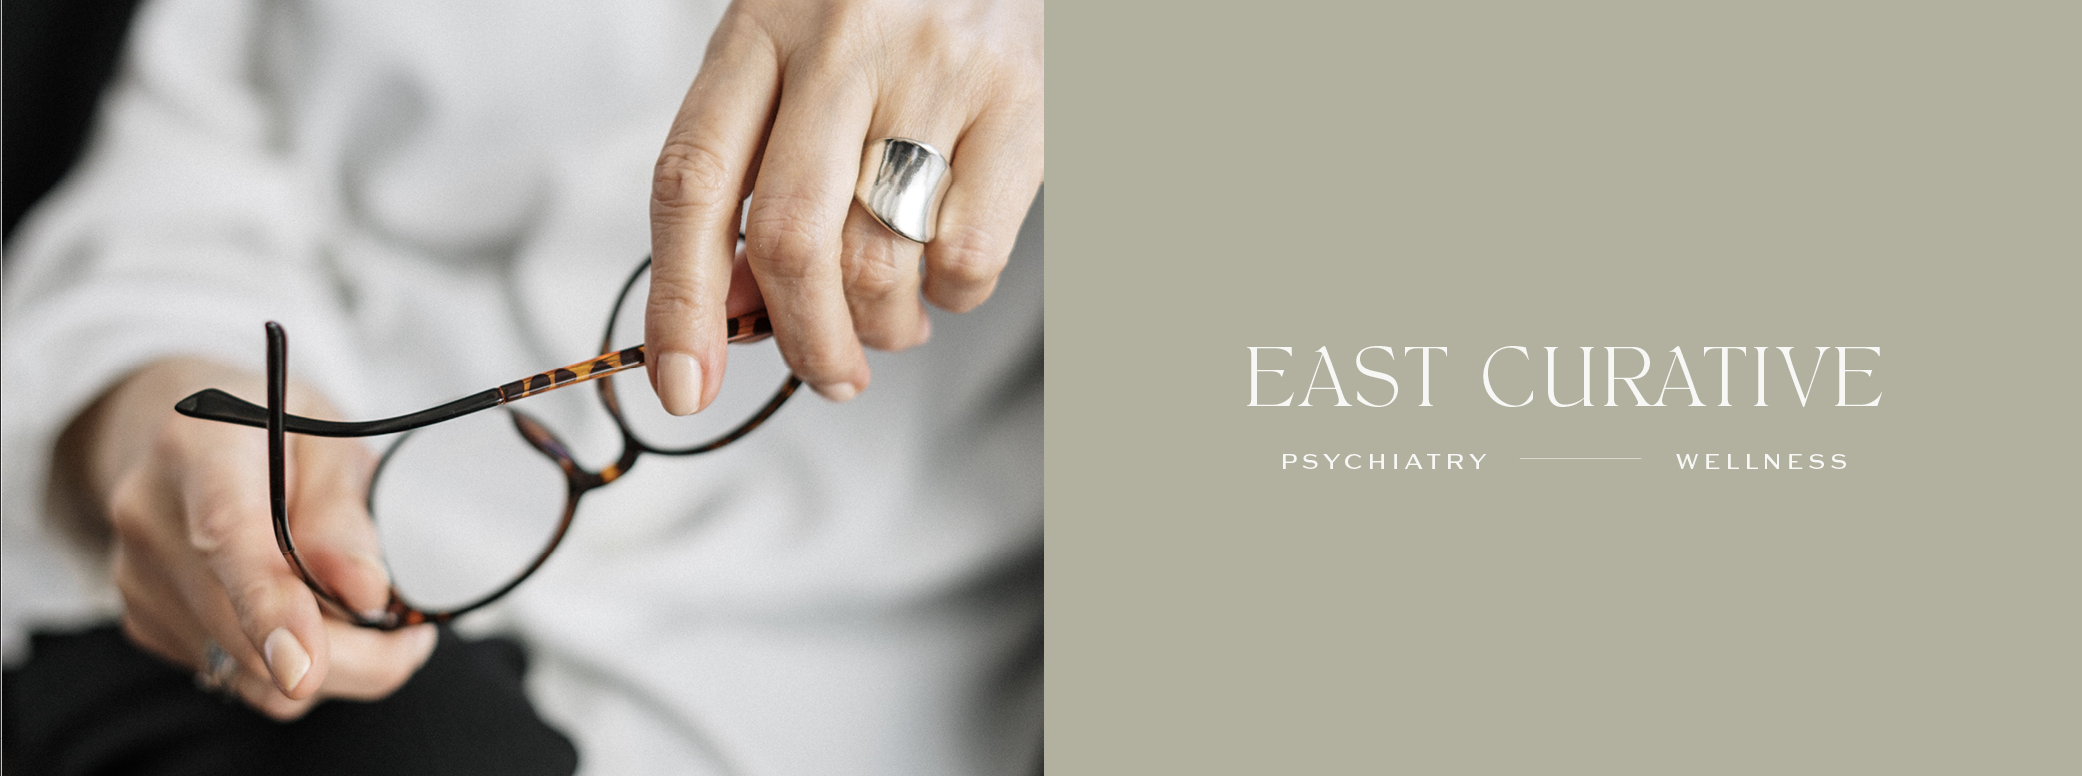 East Curative - Health and Wellness Branding - Therapist Logo Design - Sarah Ann Design